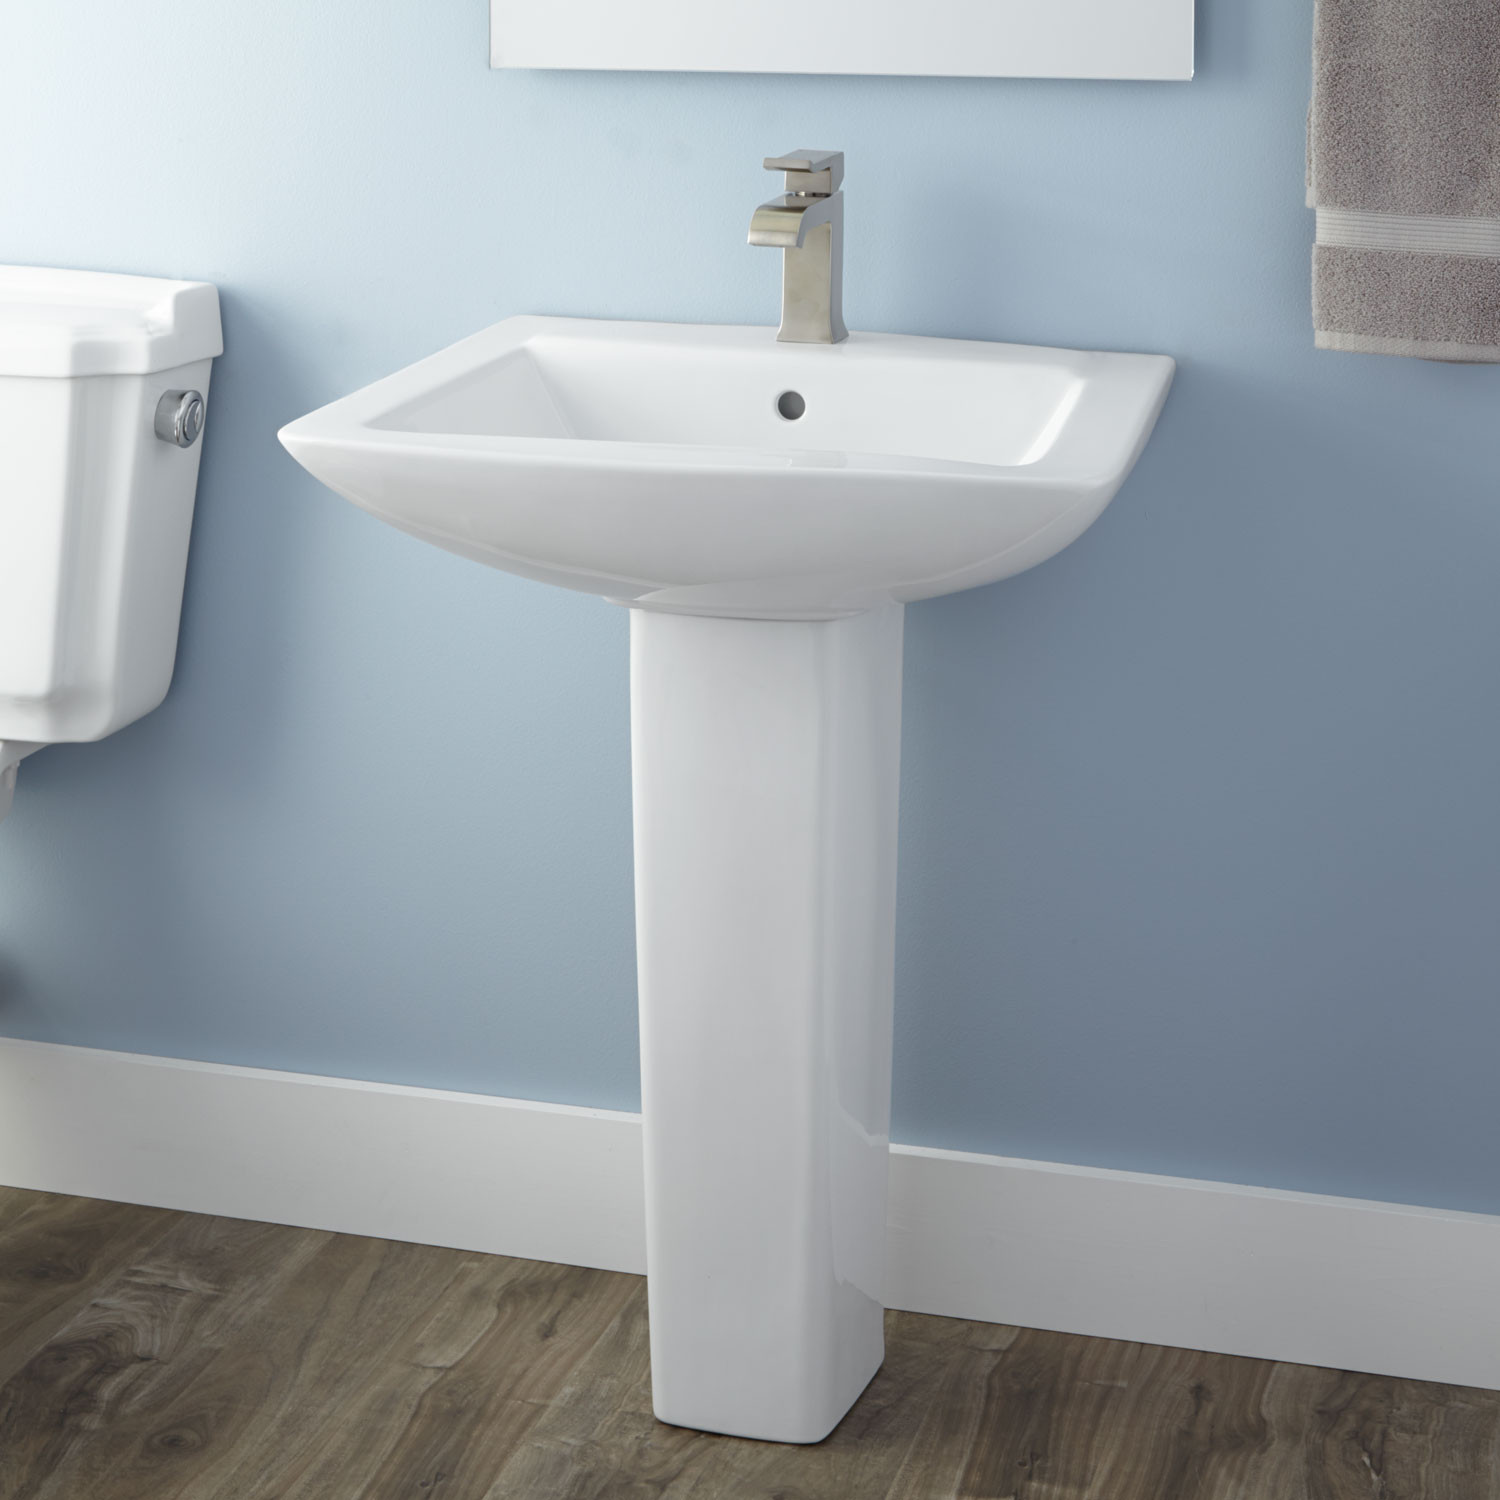 Best ideas about Pedestal Bathroom Sinks
. Save or Pin Signature Hardware Darby Porcelain Pedestal Sink Now.